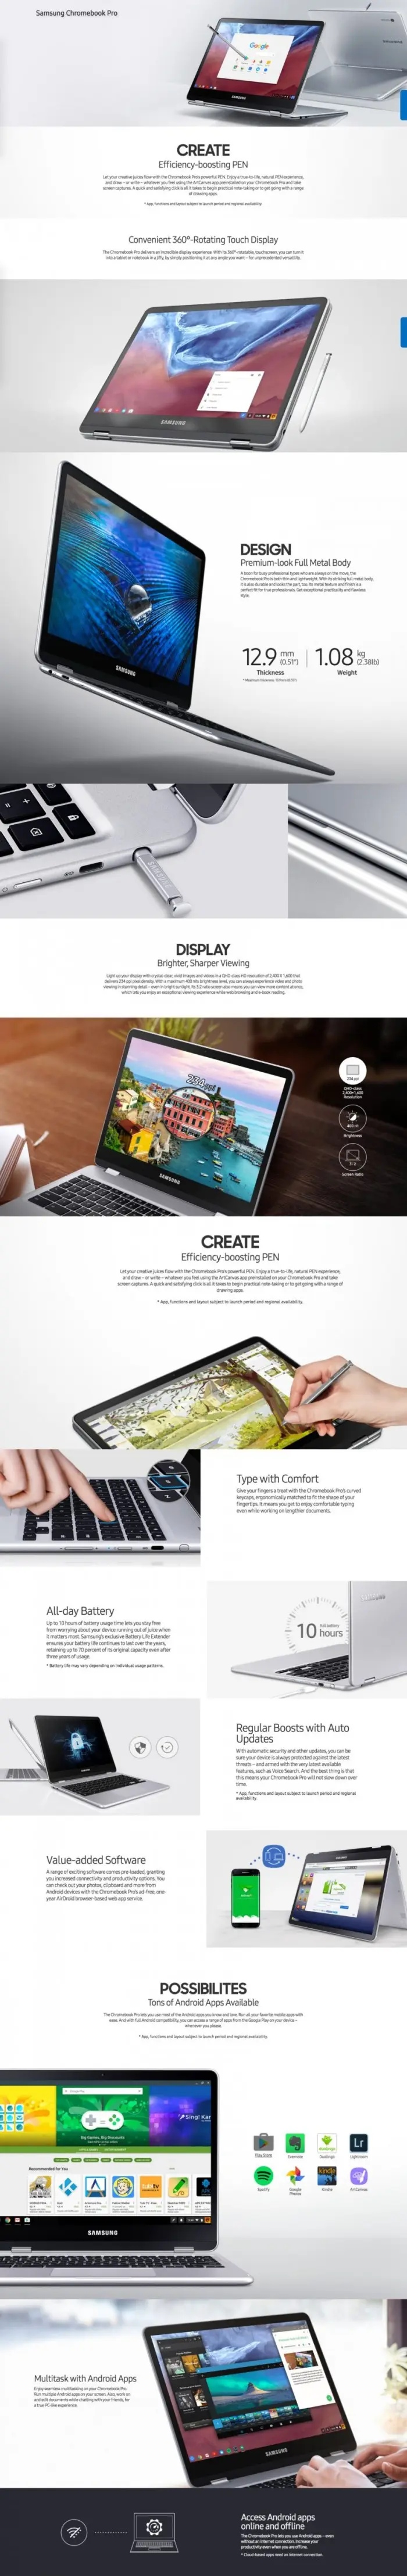 Samsung-Chromebook-Pro-detalles